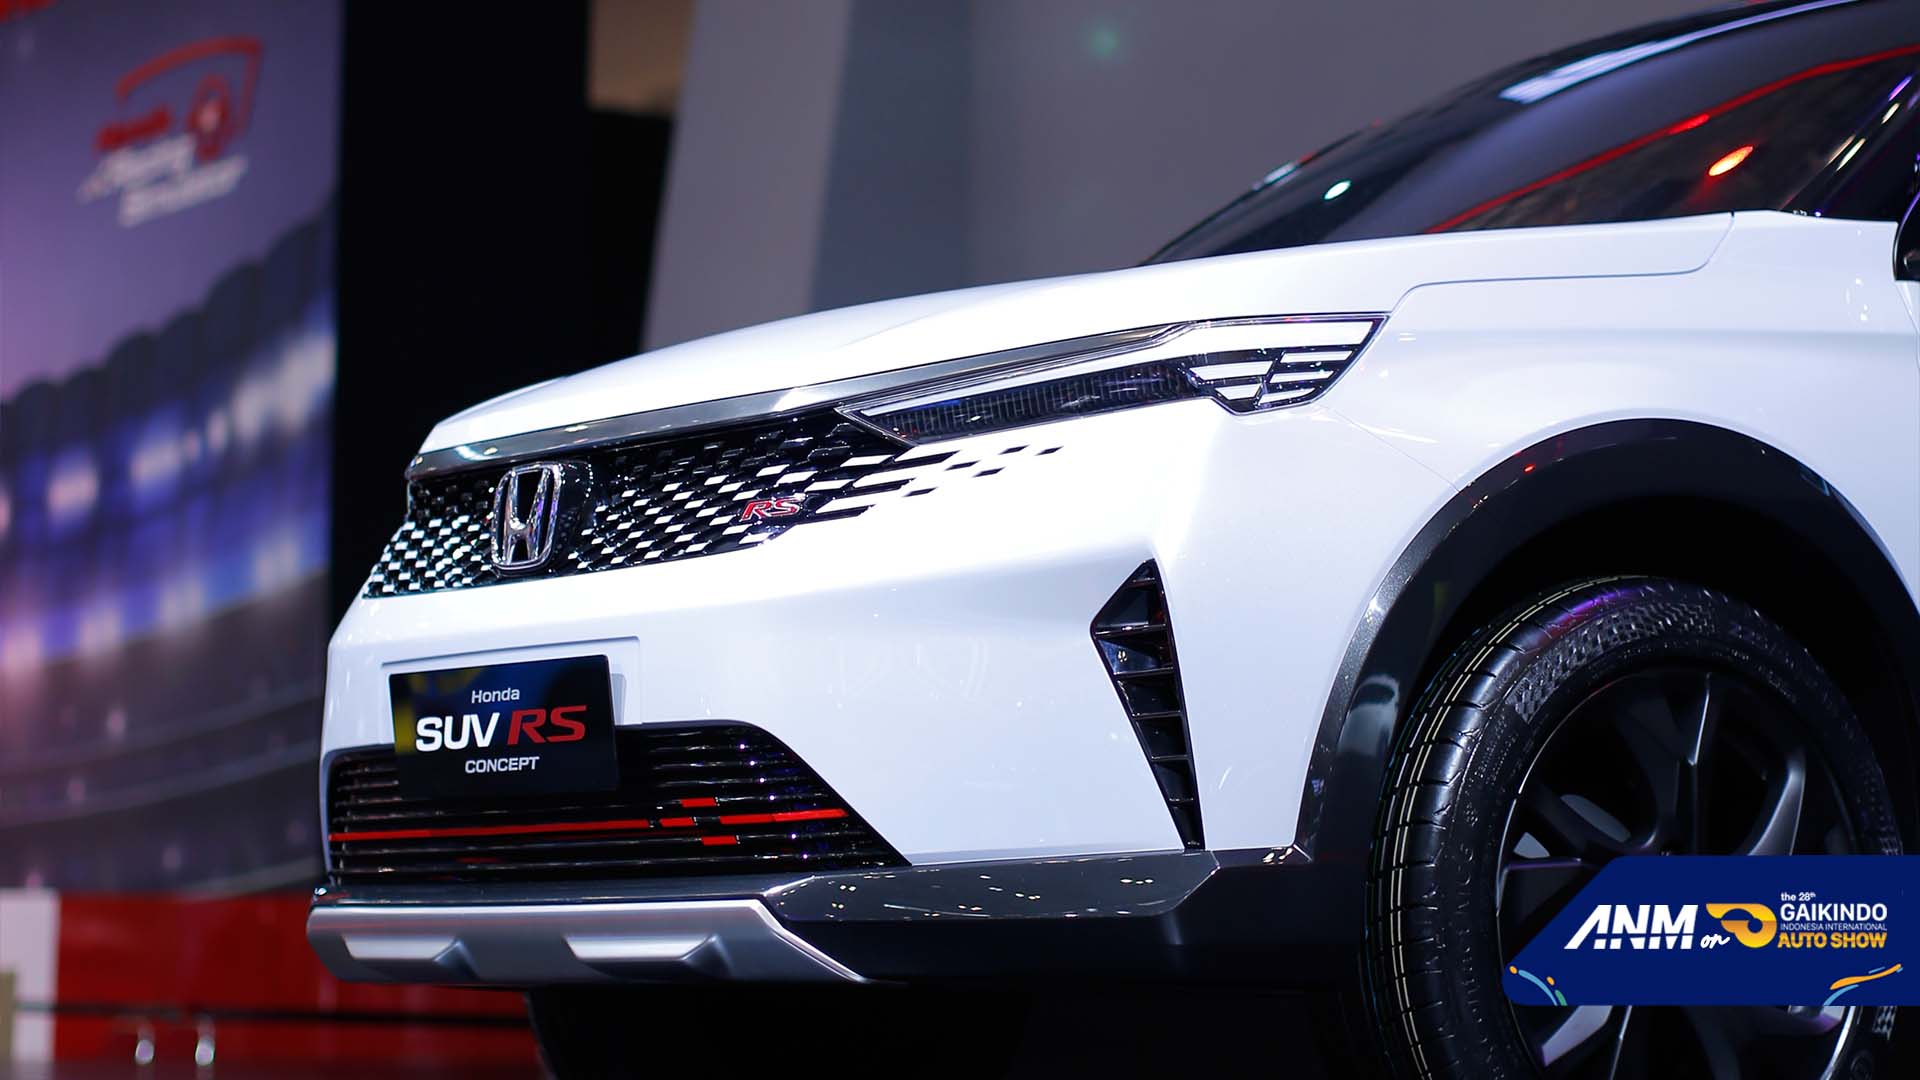 Berita, Detail foto Honda SUV RS Concept: GIIAS 2021 : Foto Lengkap Honda SUV RS Concept, Emang Ganteng!